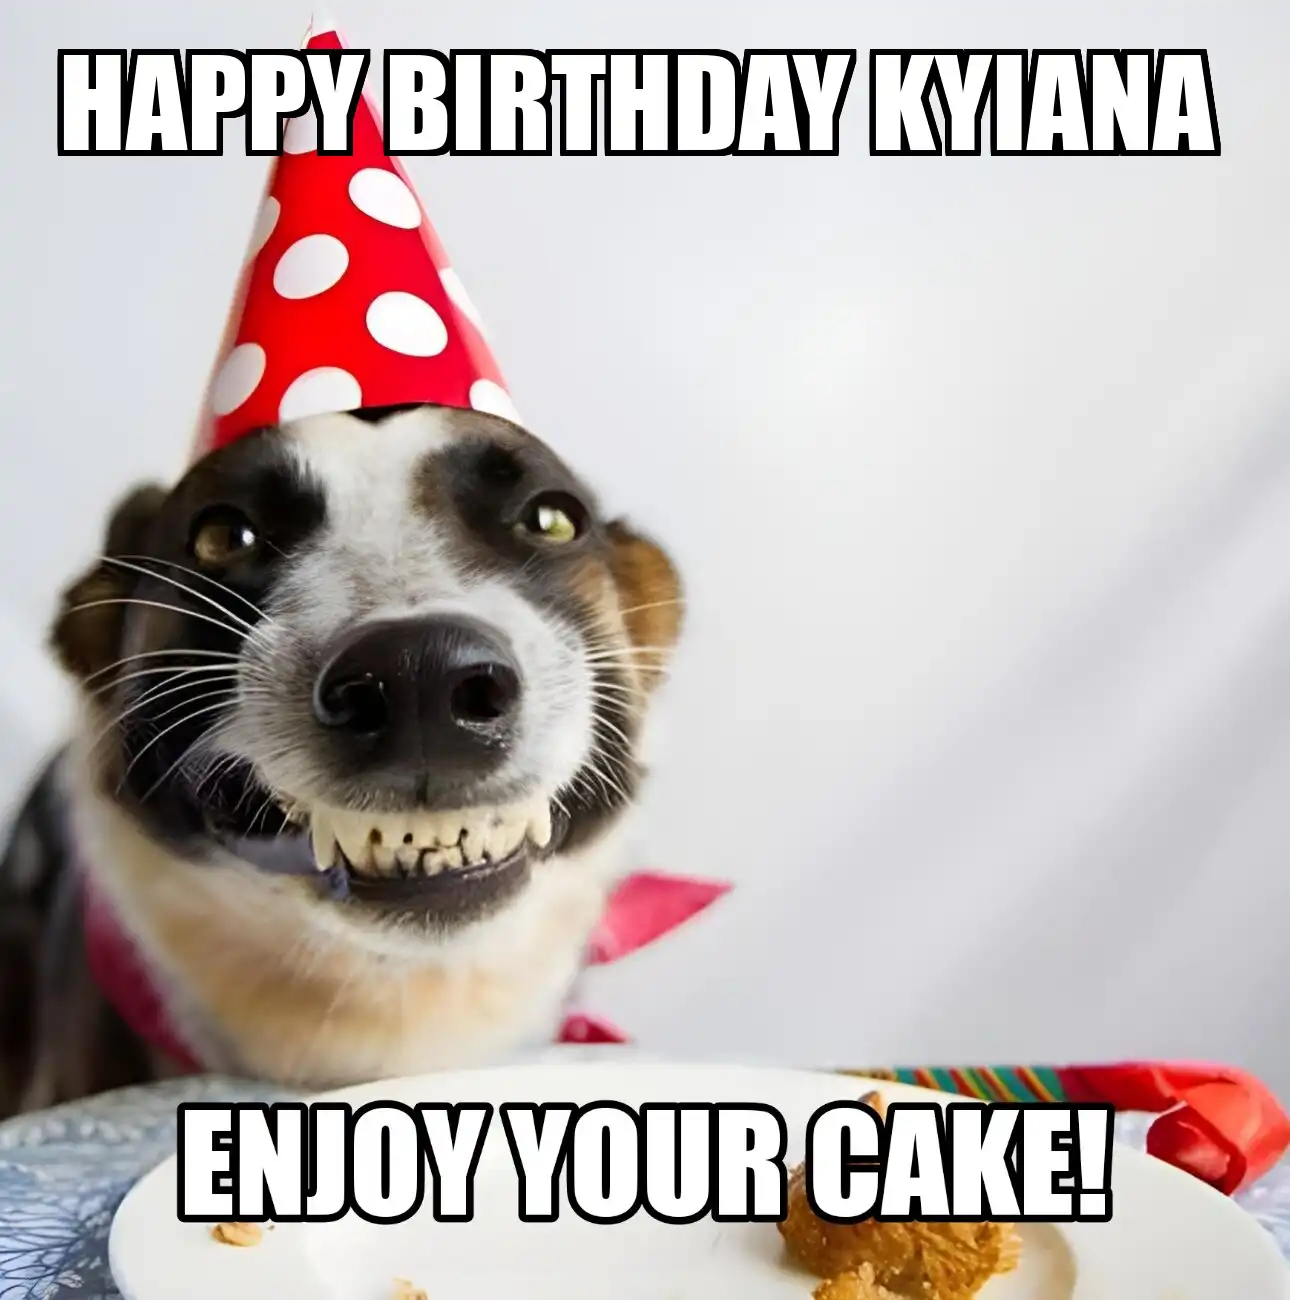 Happy Birthday Kyiana Enjoy Your Cake Dog Meme